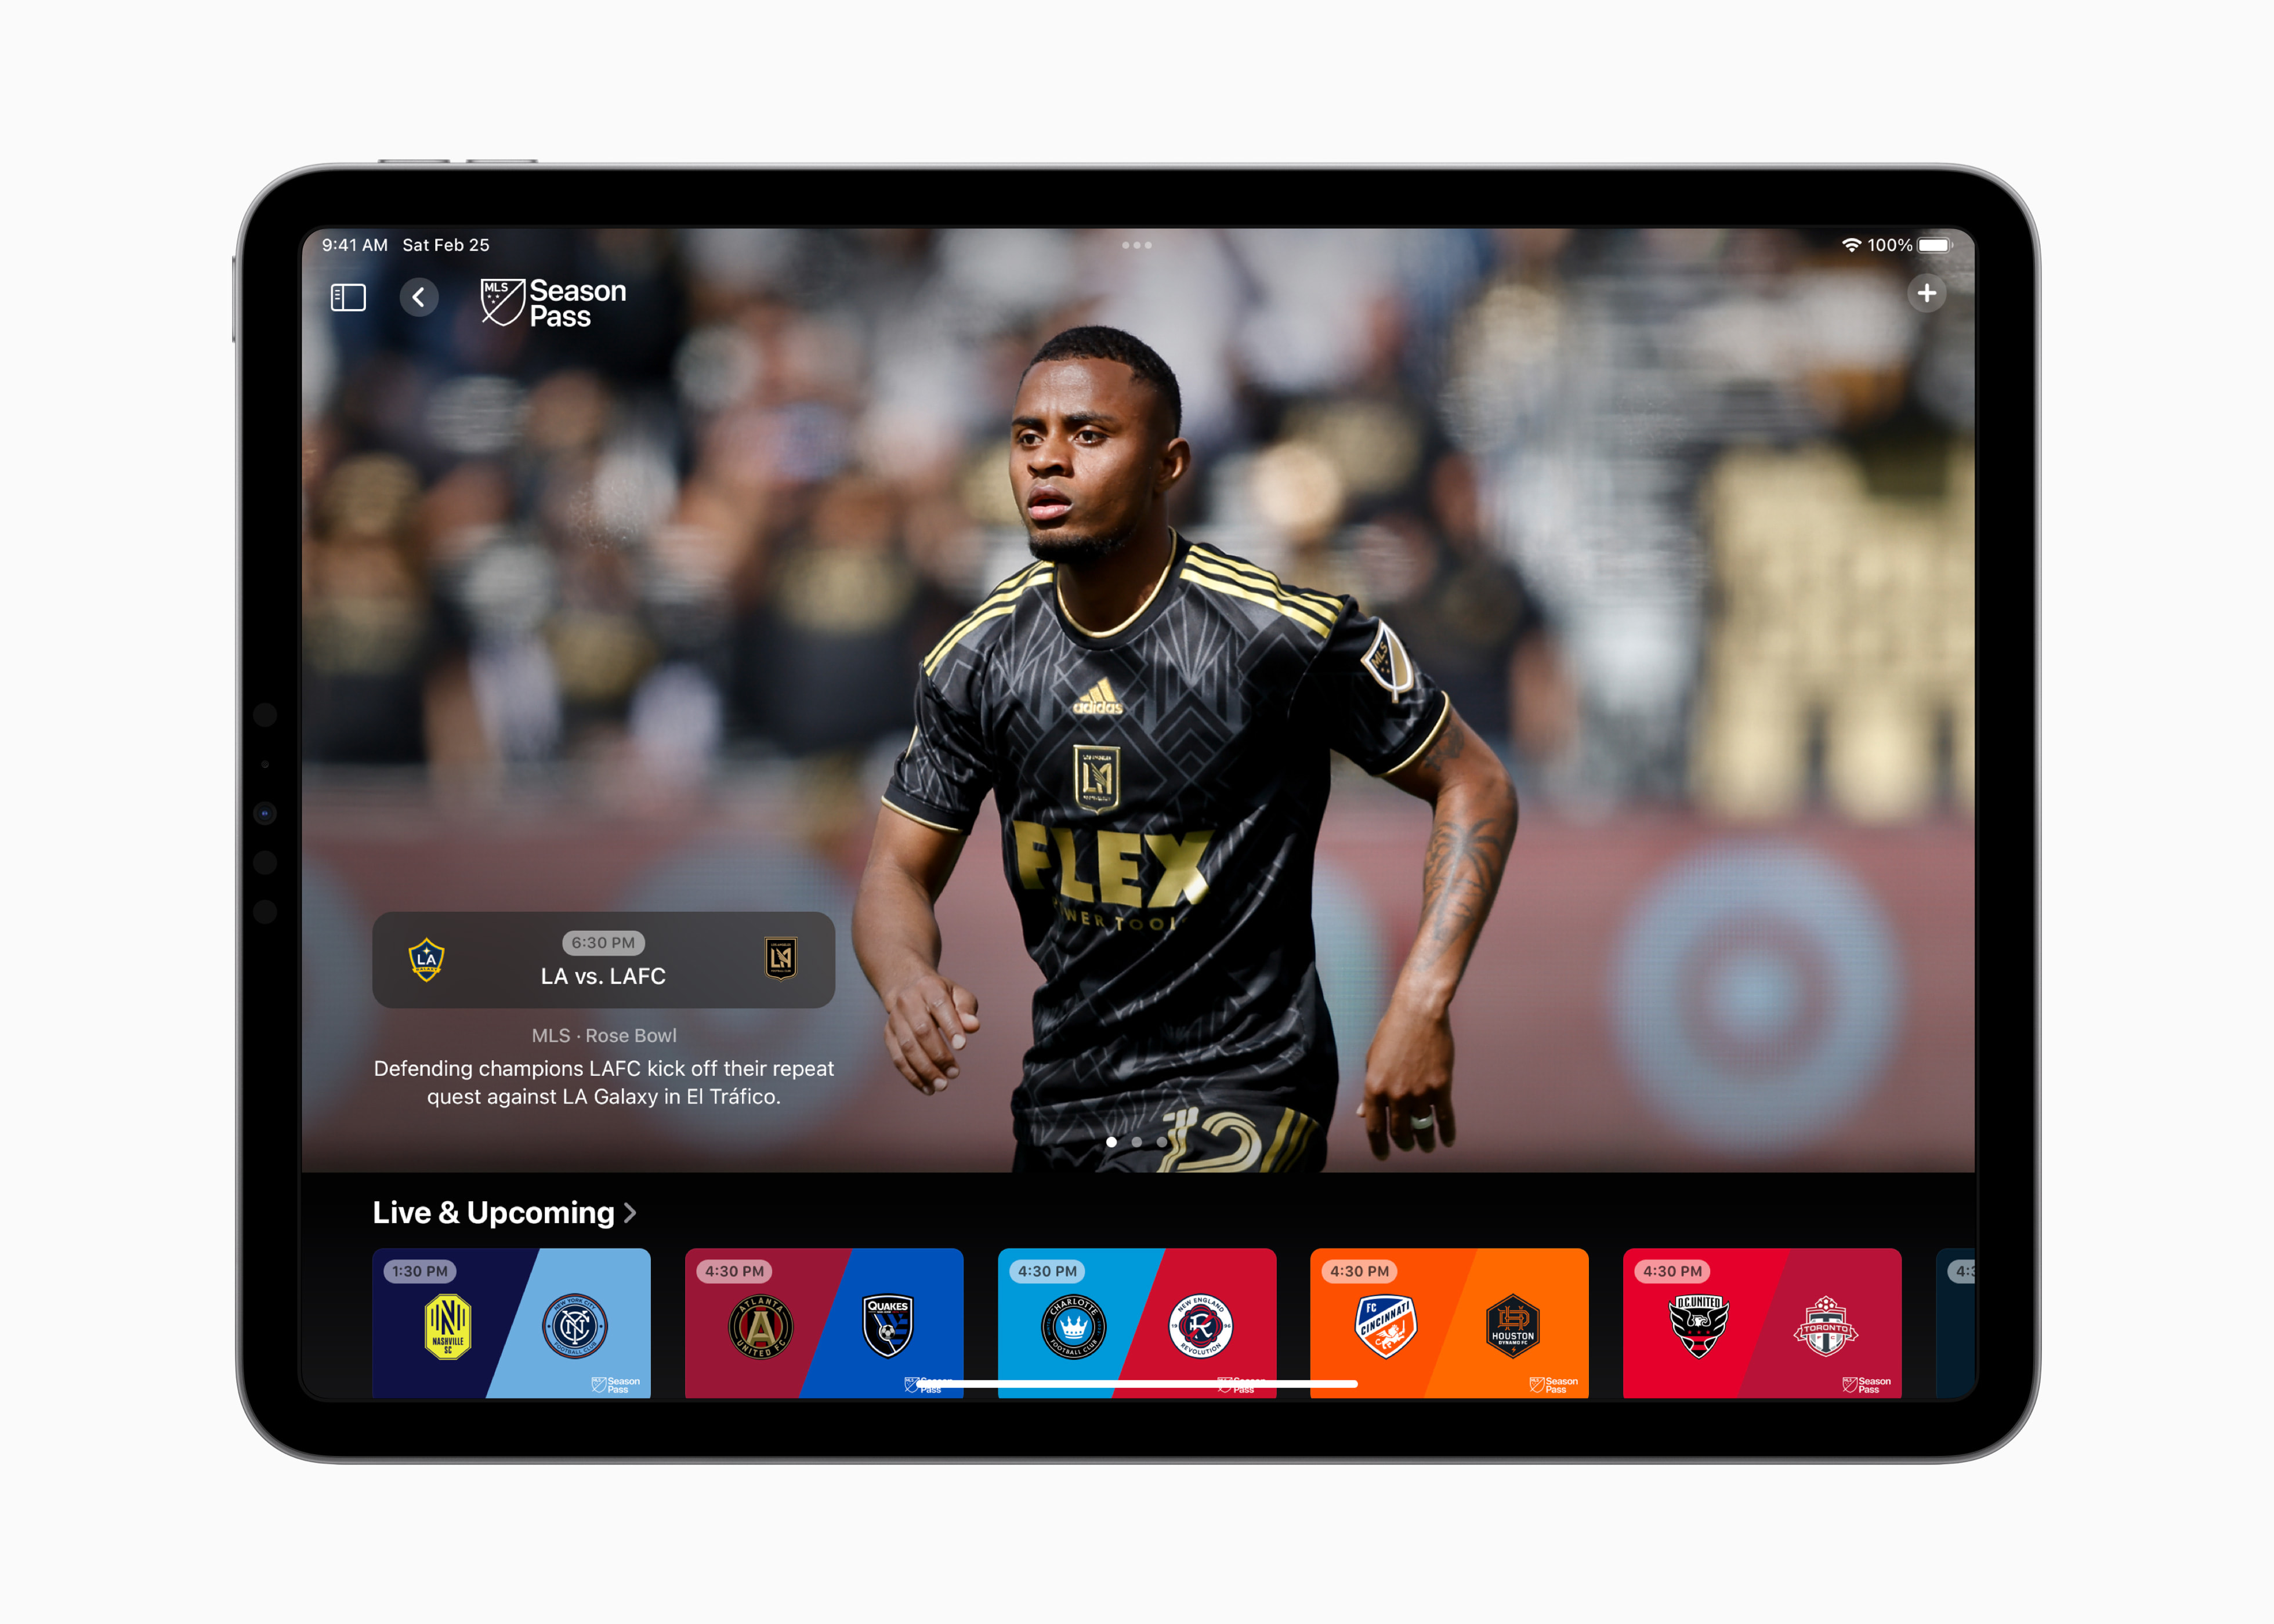 støvle kvælende utilsigtet hændelse MLS Season Pass is now available worldwide on the Apple TV app - Apple